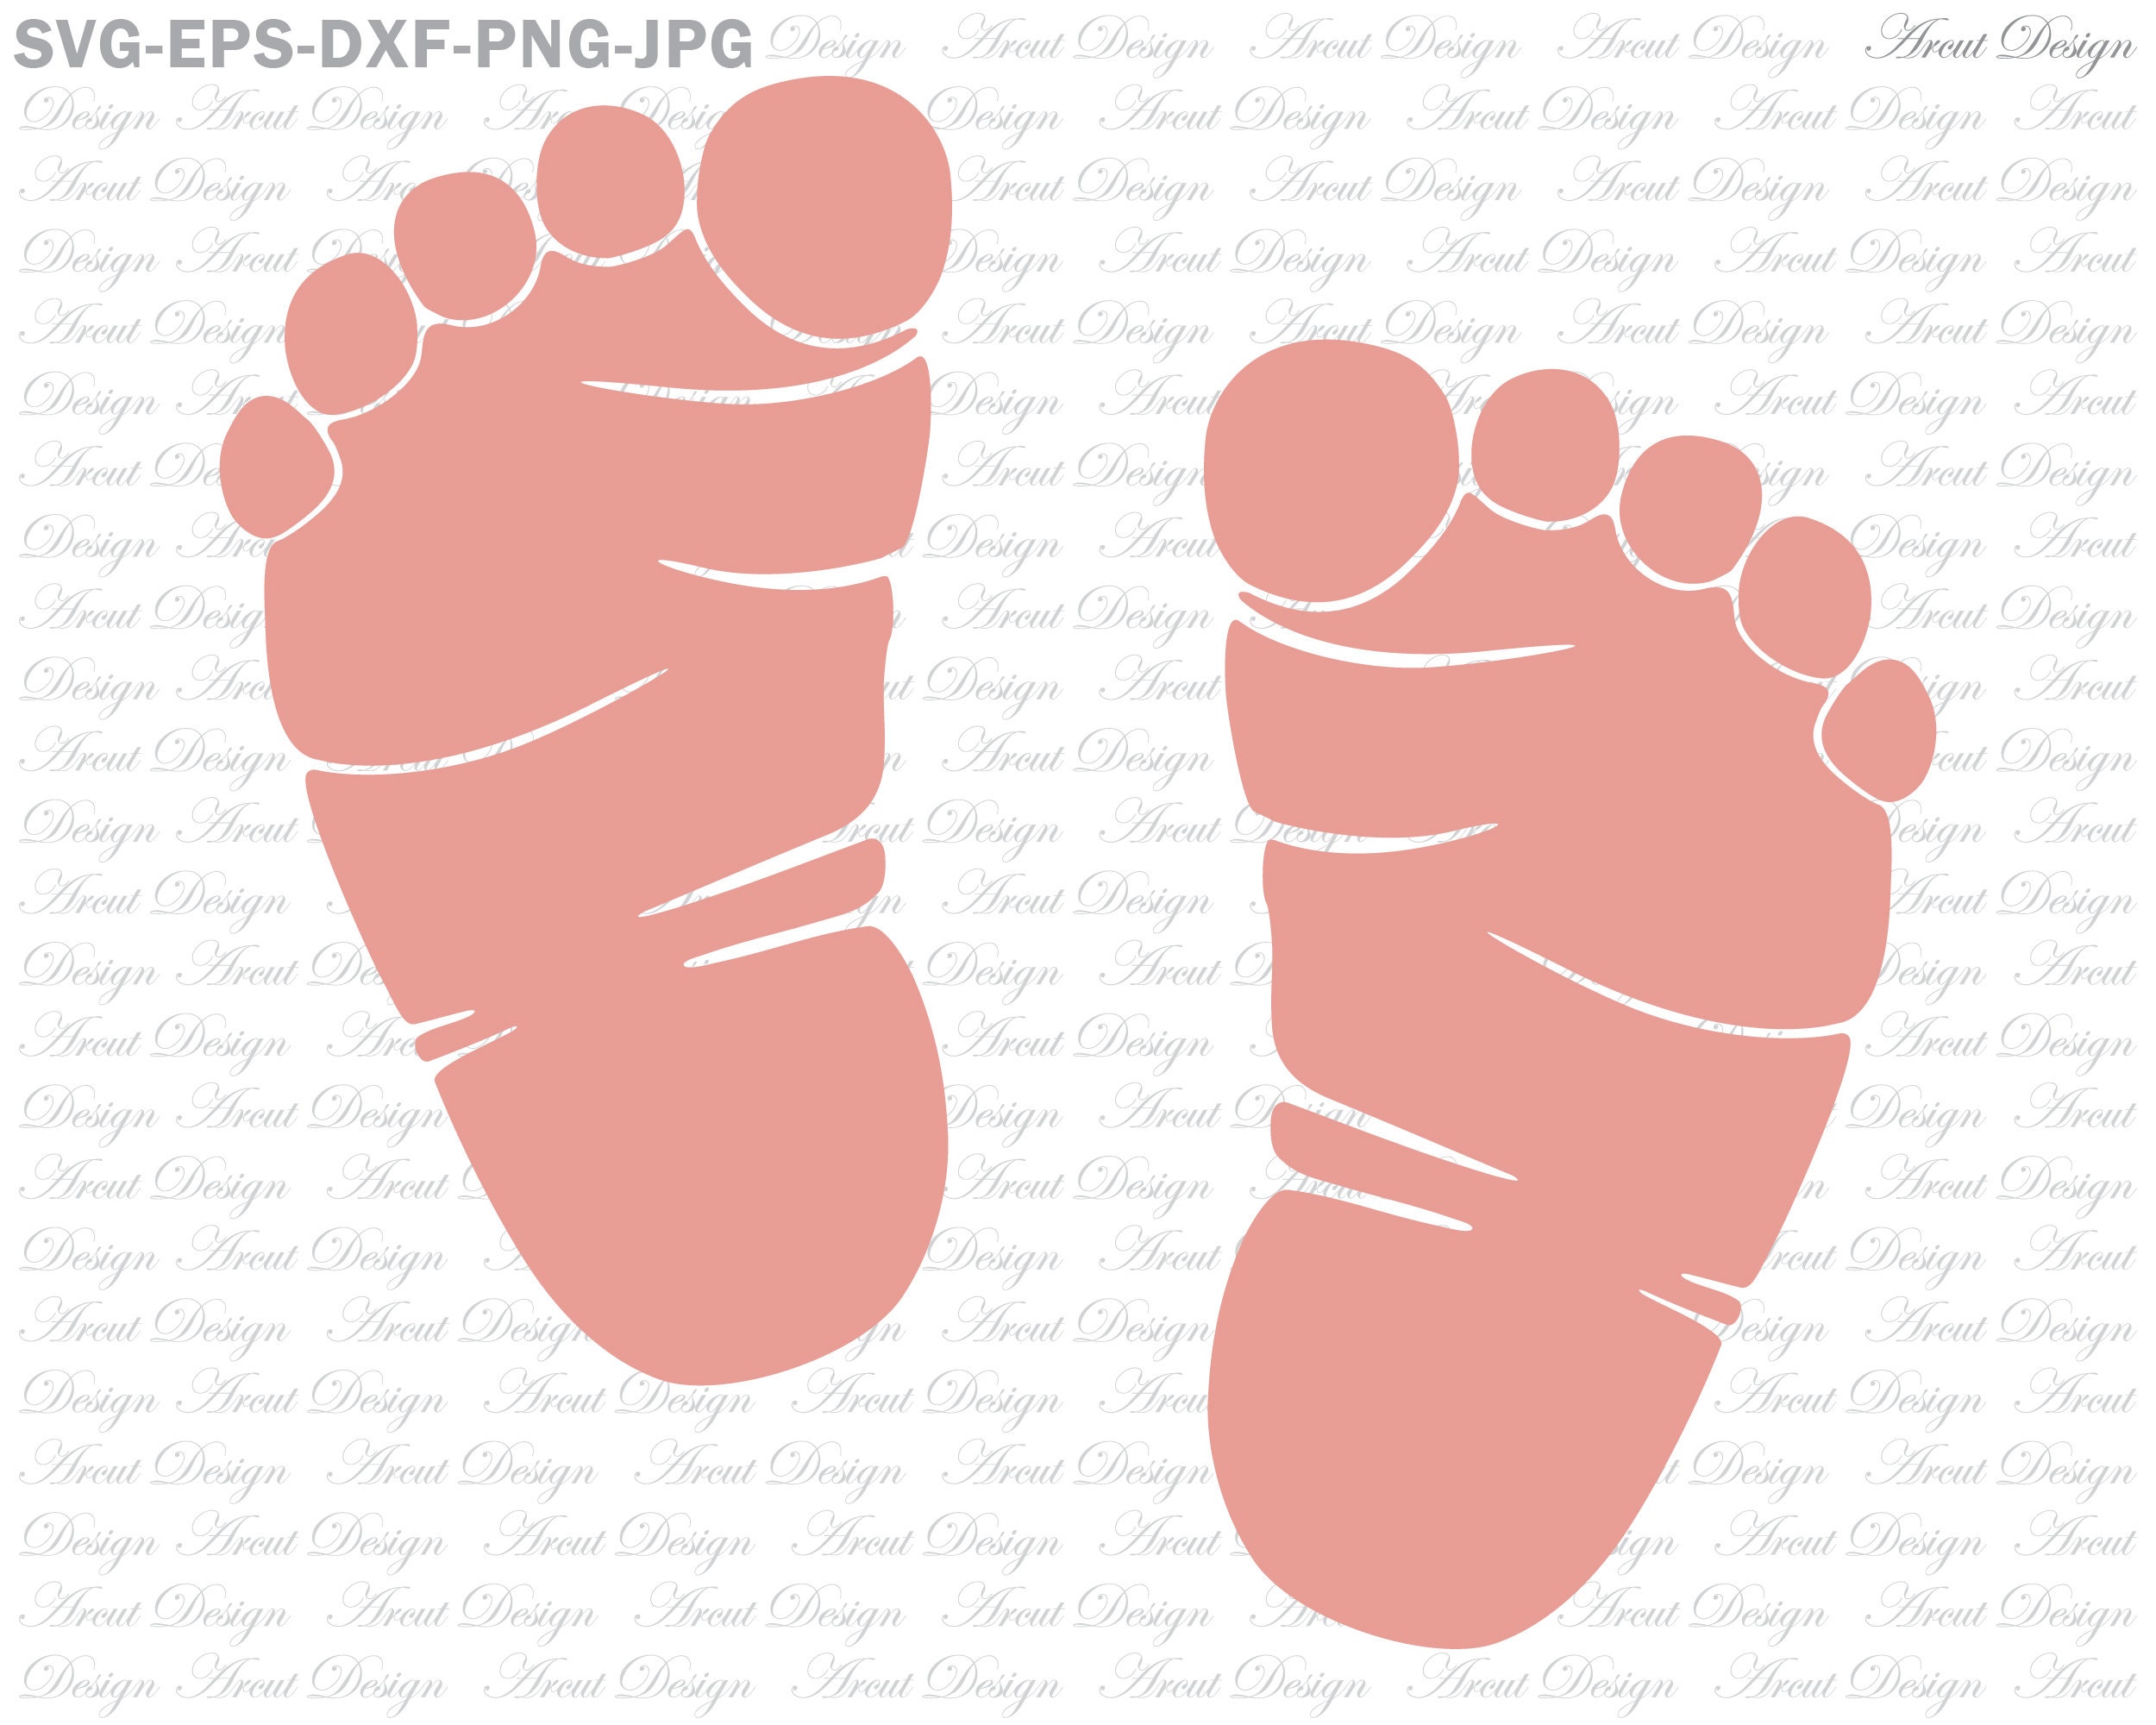 5. Adorable Baby Footprint Nail Art - wide 7